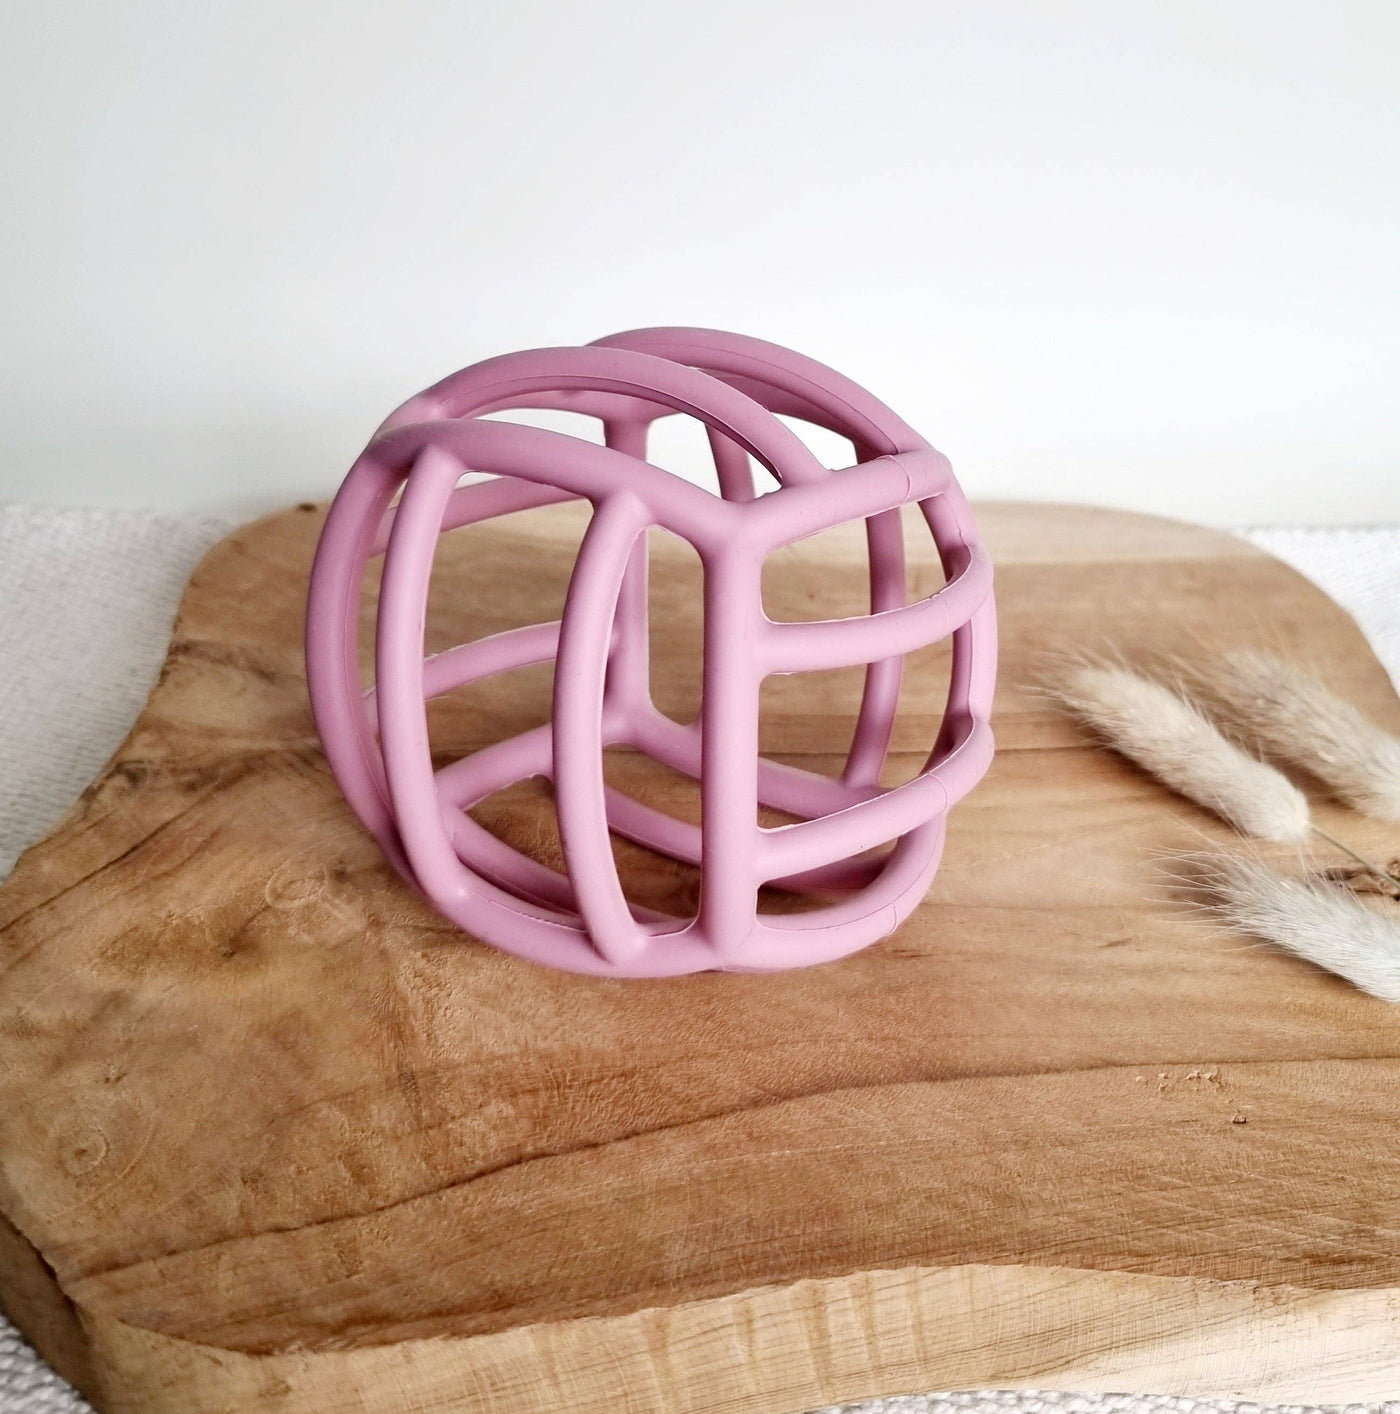 Rammelaartje - Silicone flexible motor ball - Powder pink